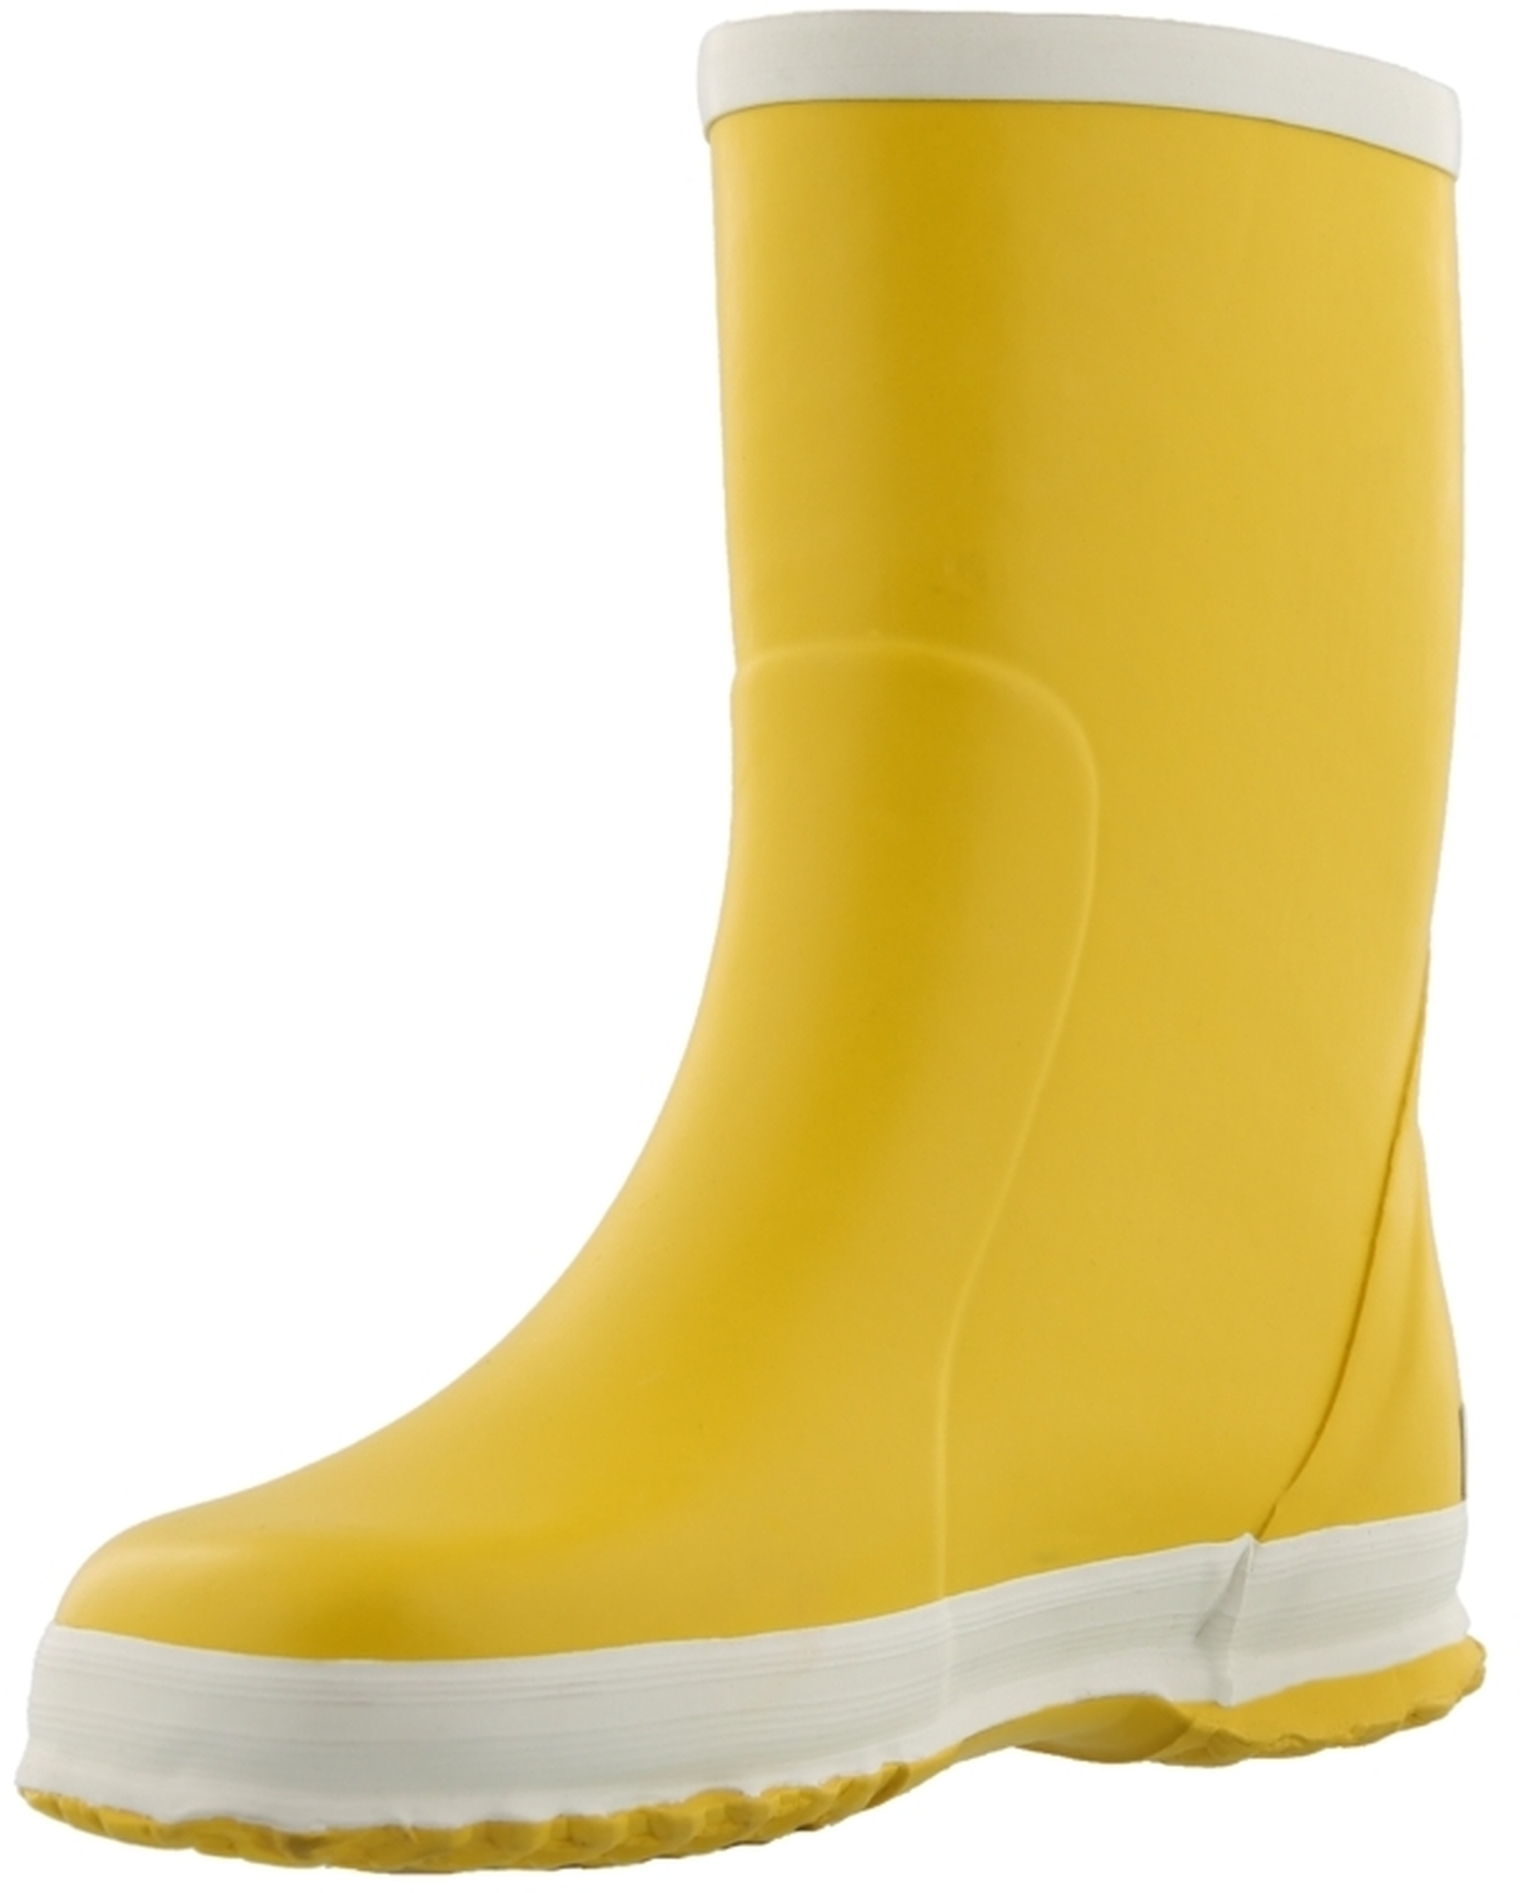 Rainboot Yellow Rubber